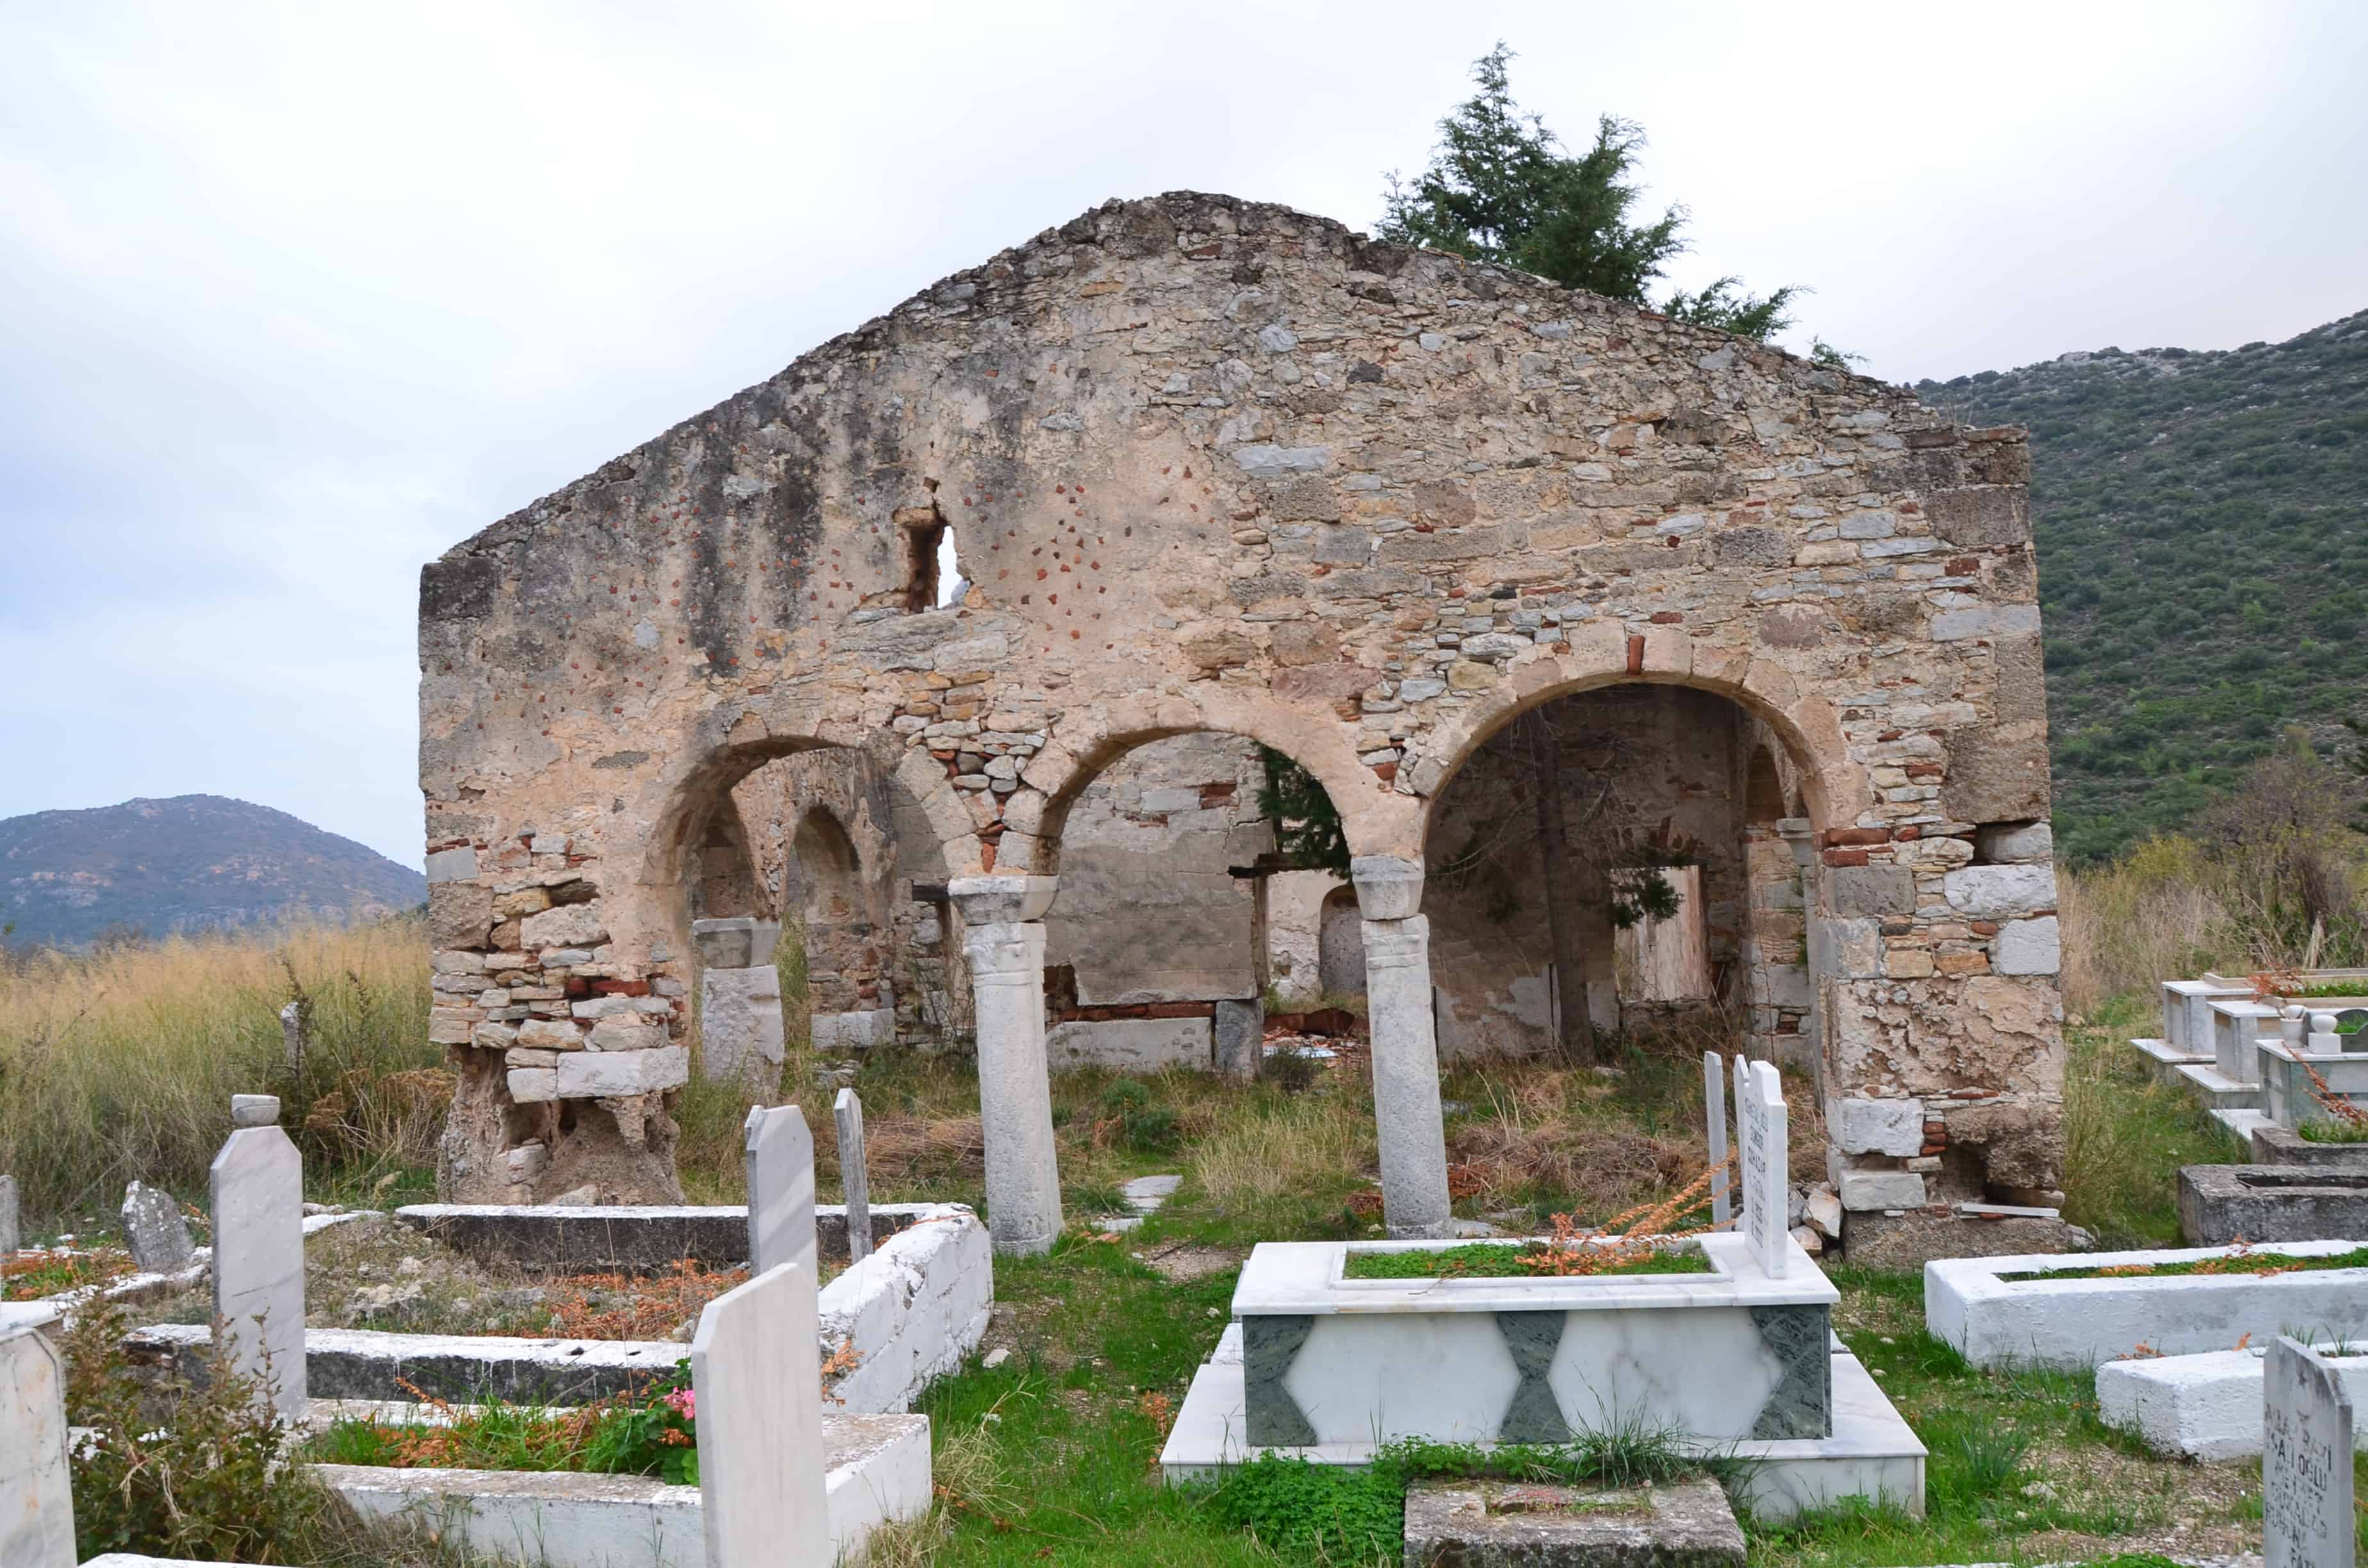 Ruined church on Datça Peninsula, Turkey